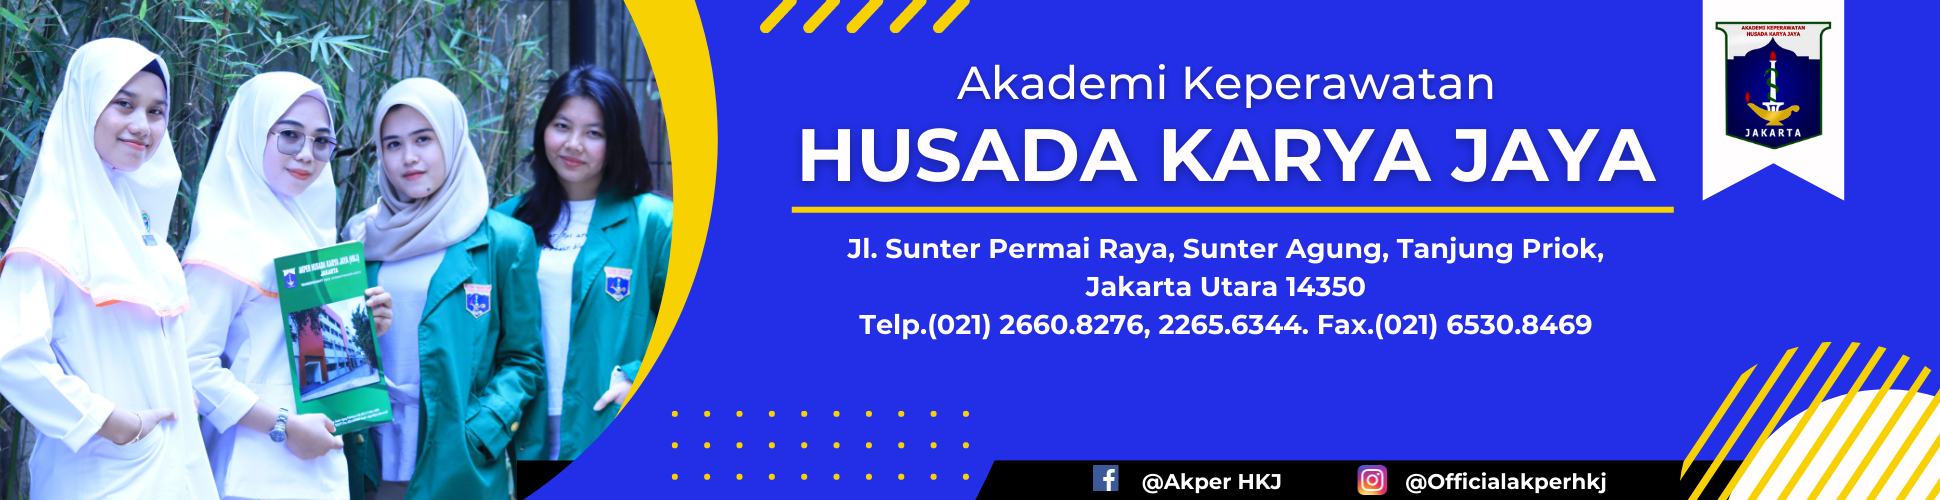 Akademi Keperawatan Husada Karya Jaya (HKJ) " Create Professional Nurses"